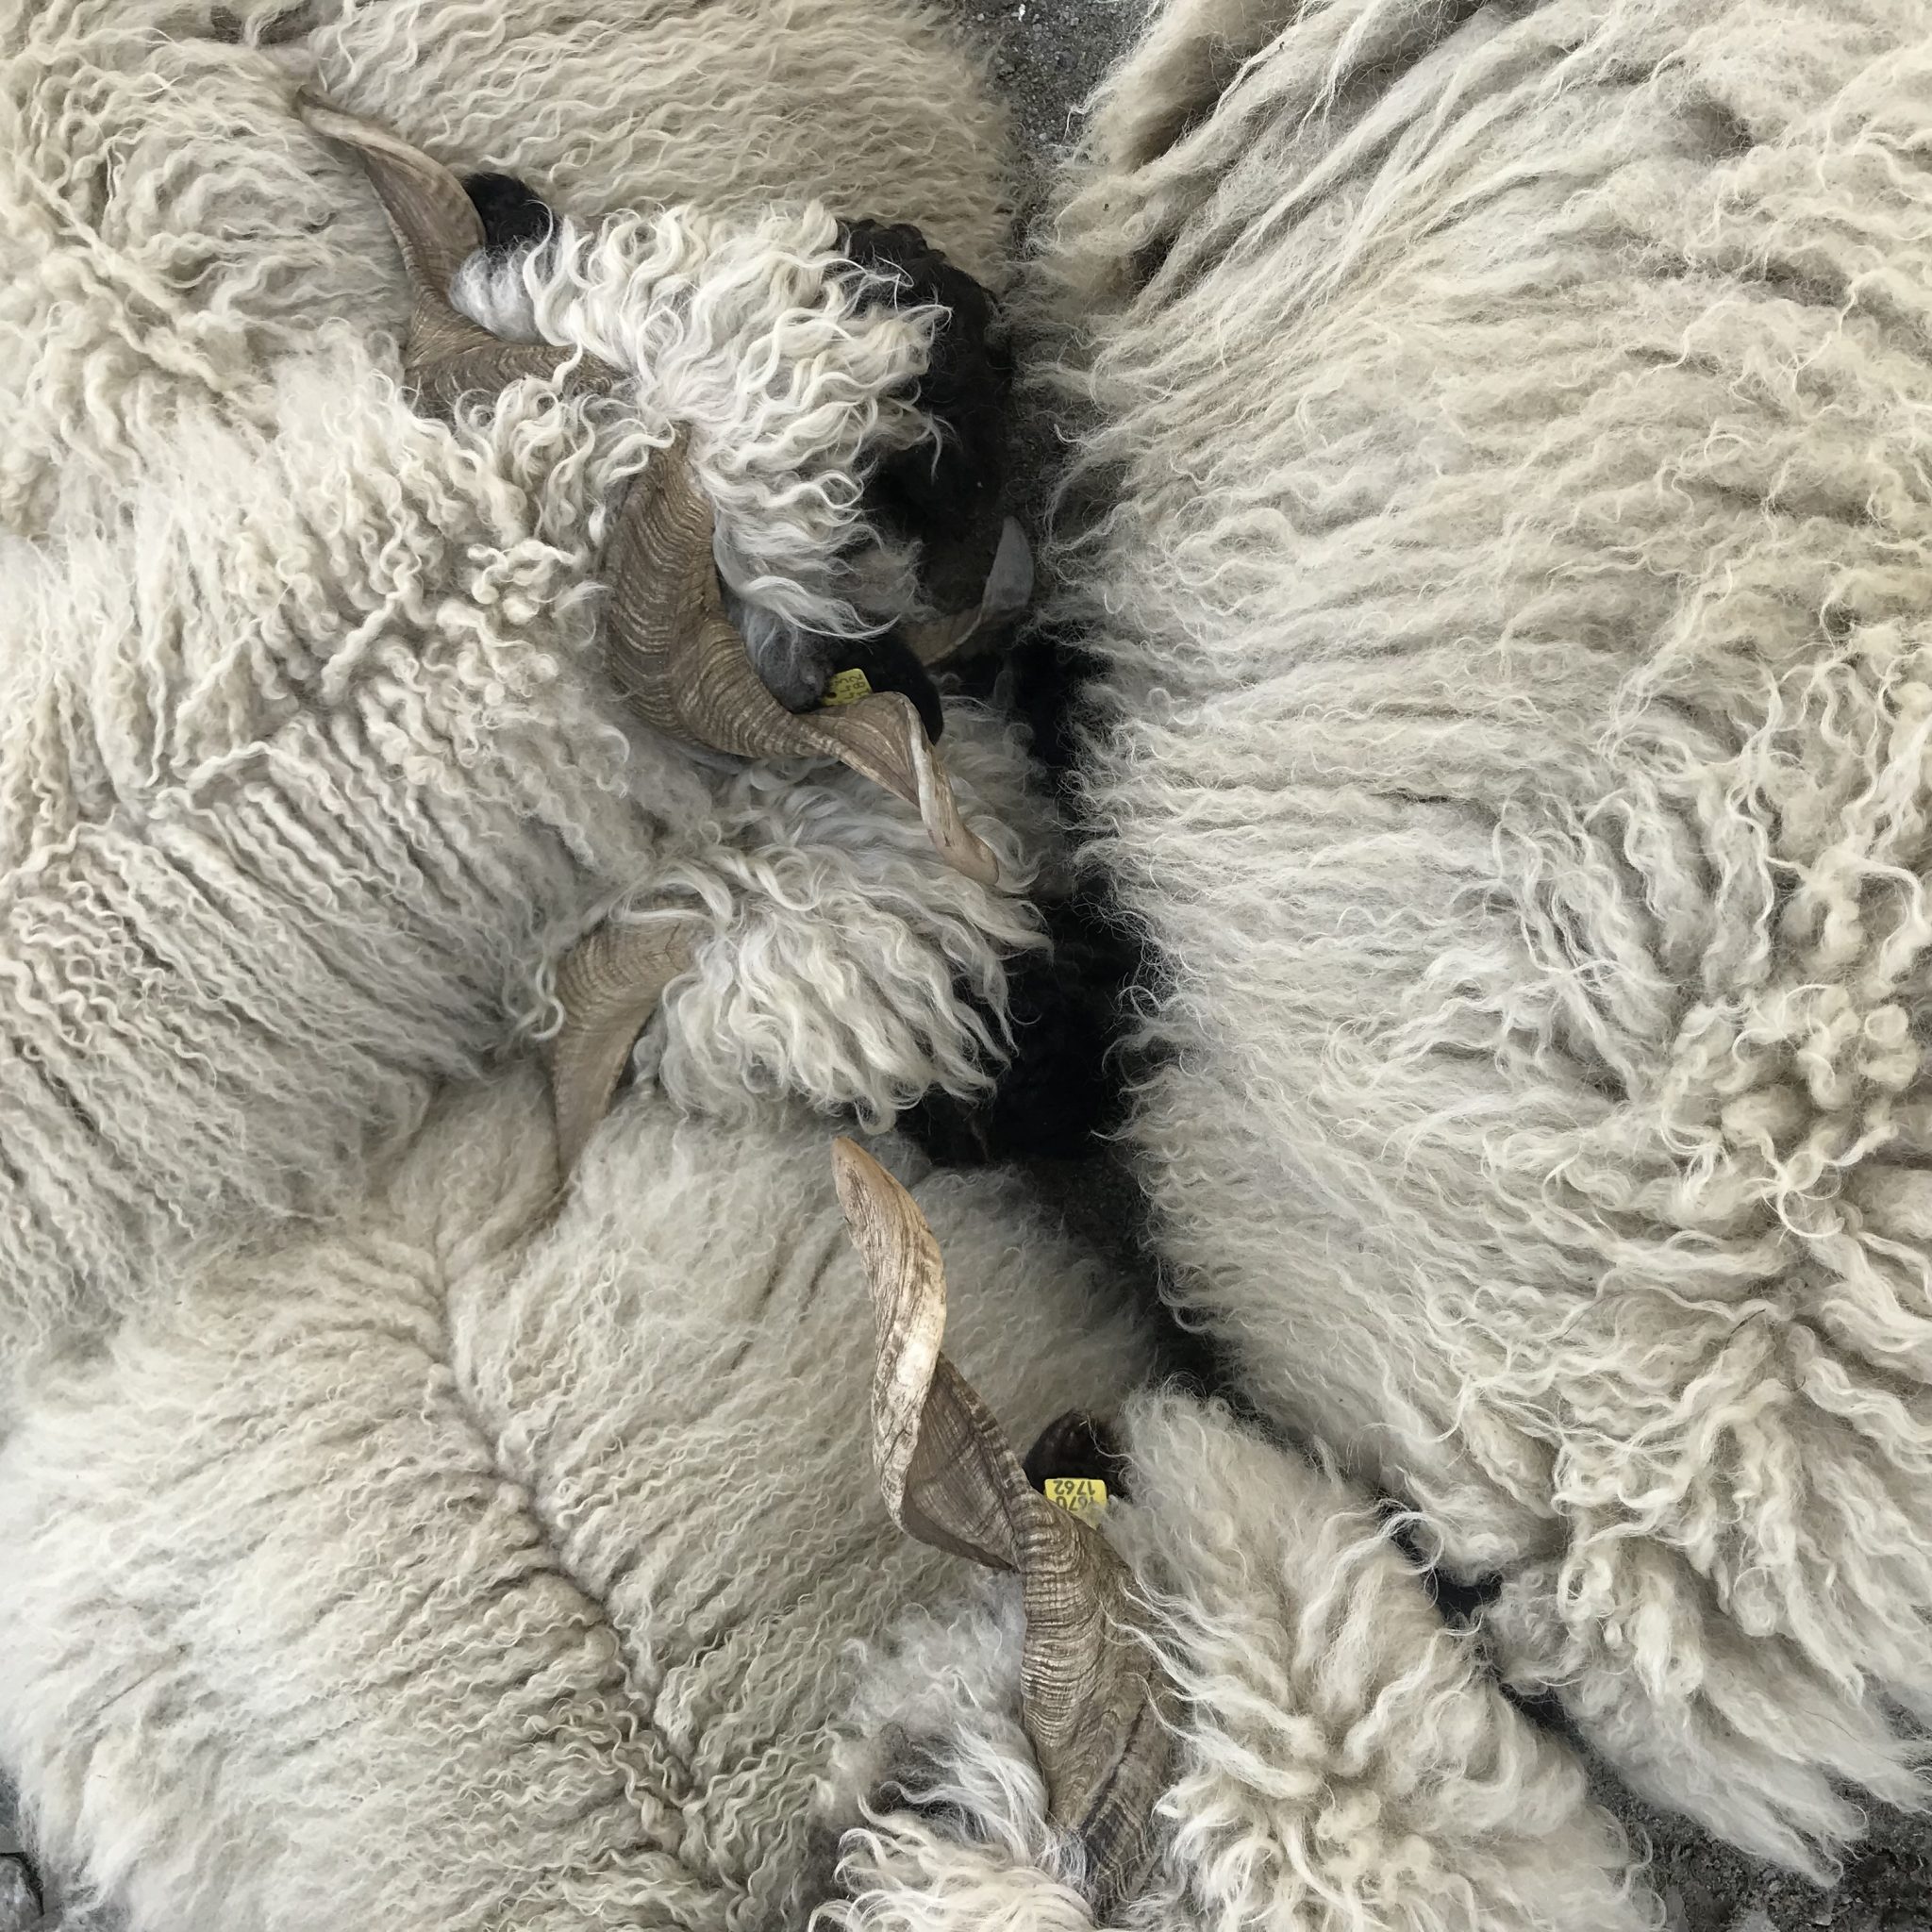  Herd of sheep, detail. Images by Lucie and Luke Meier, shot in Zermatt, Switzerland.